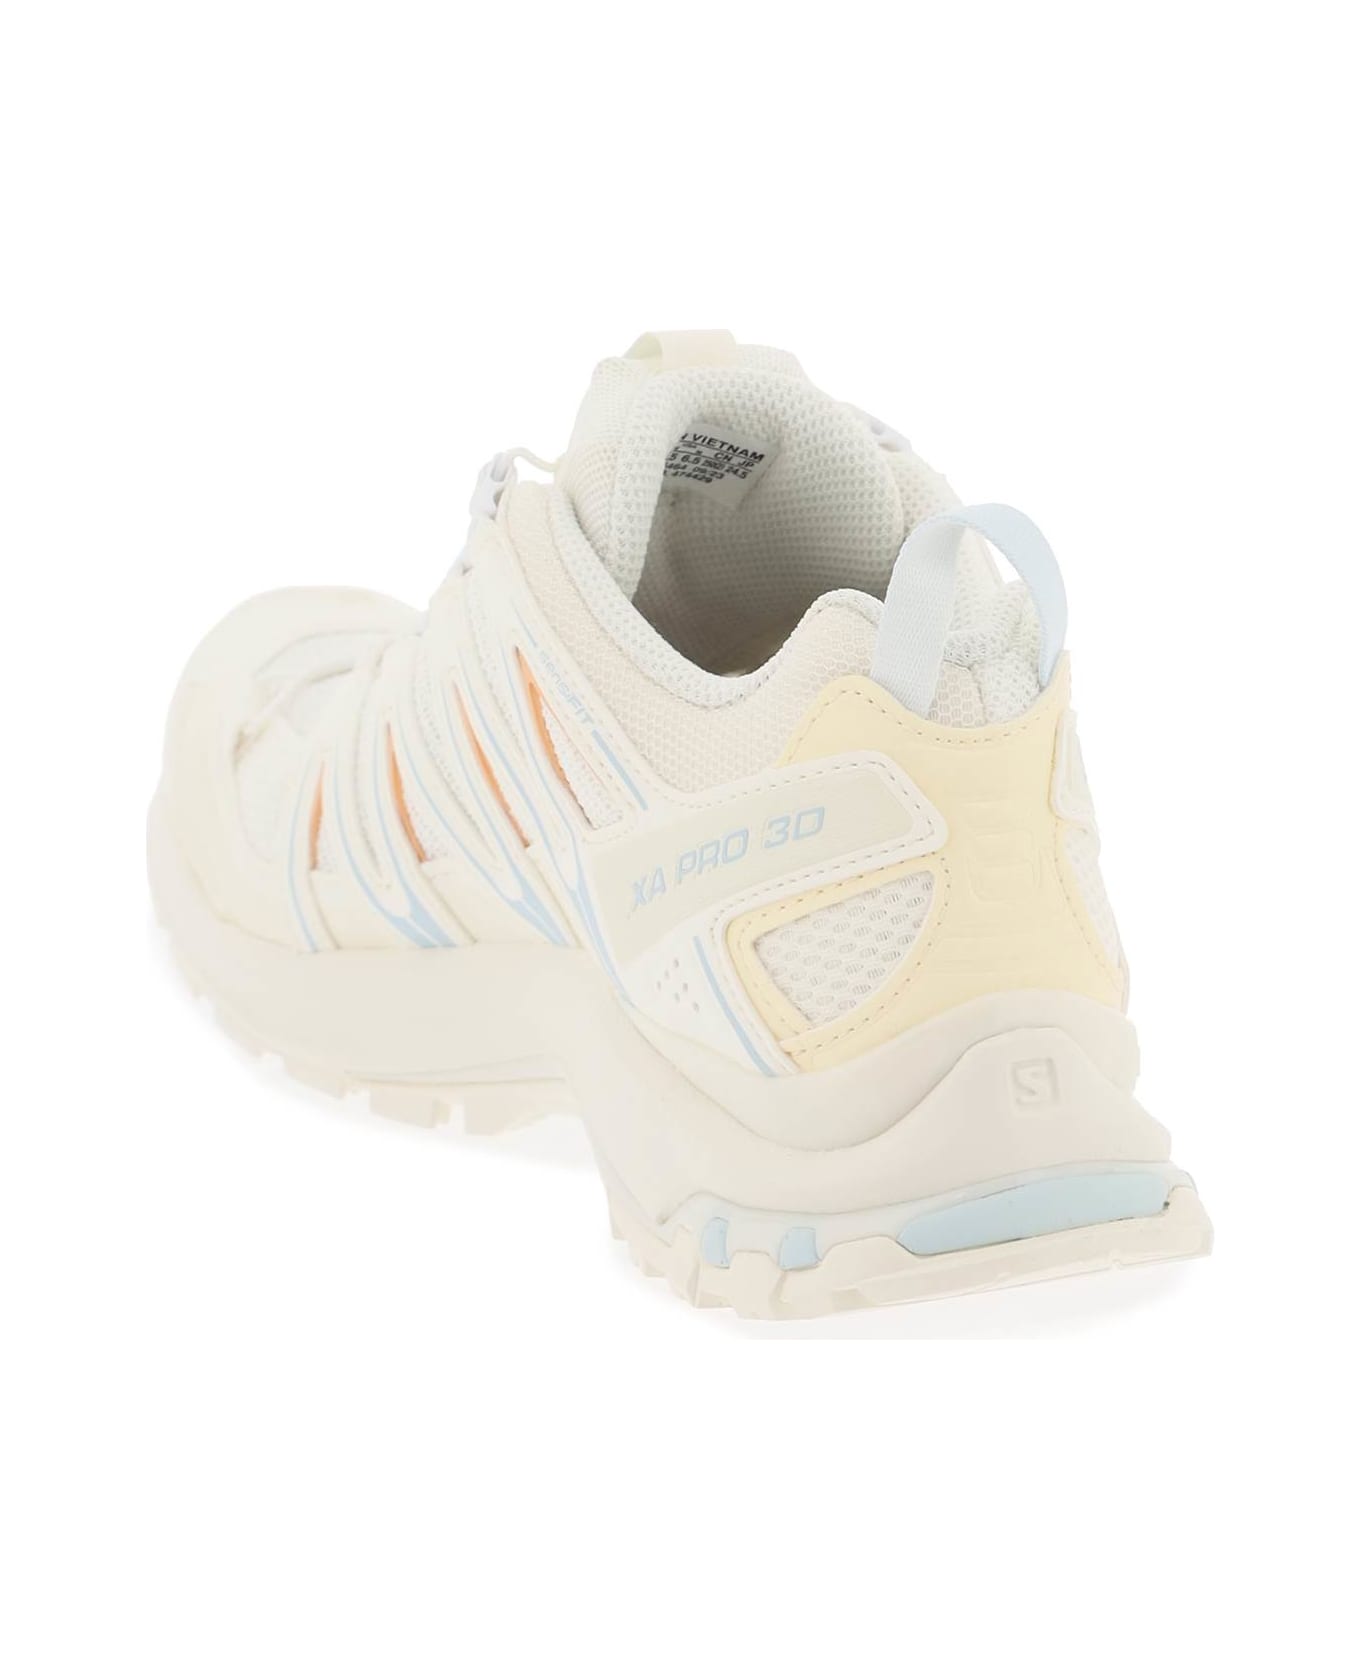 Salomon Xa Pro 3d Sneakers - VANILLA ICE BALLAD BLUE PEACH QUARTZ (White)